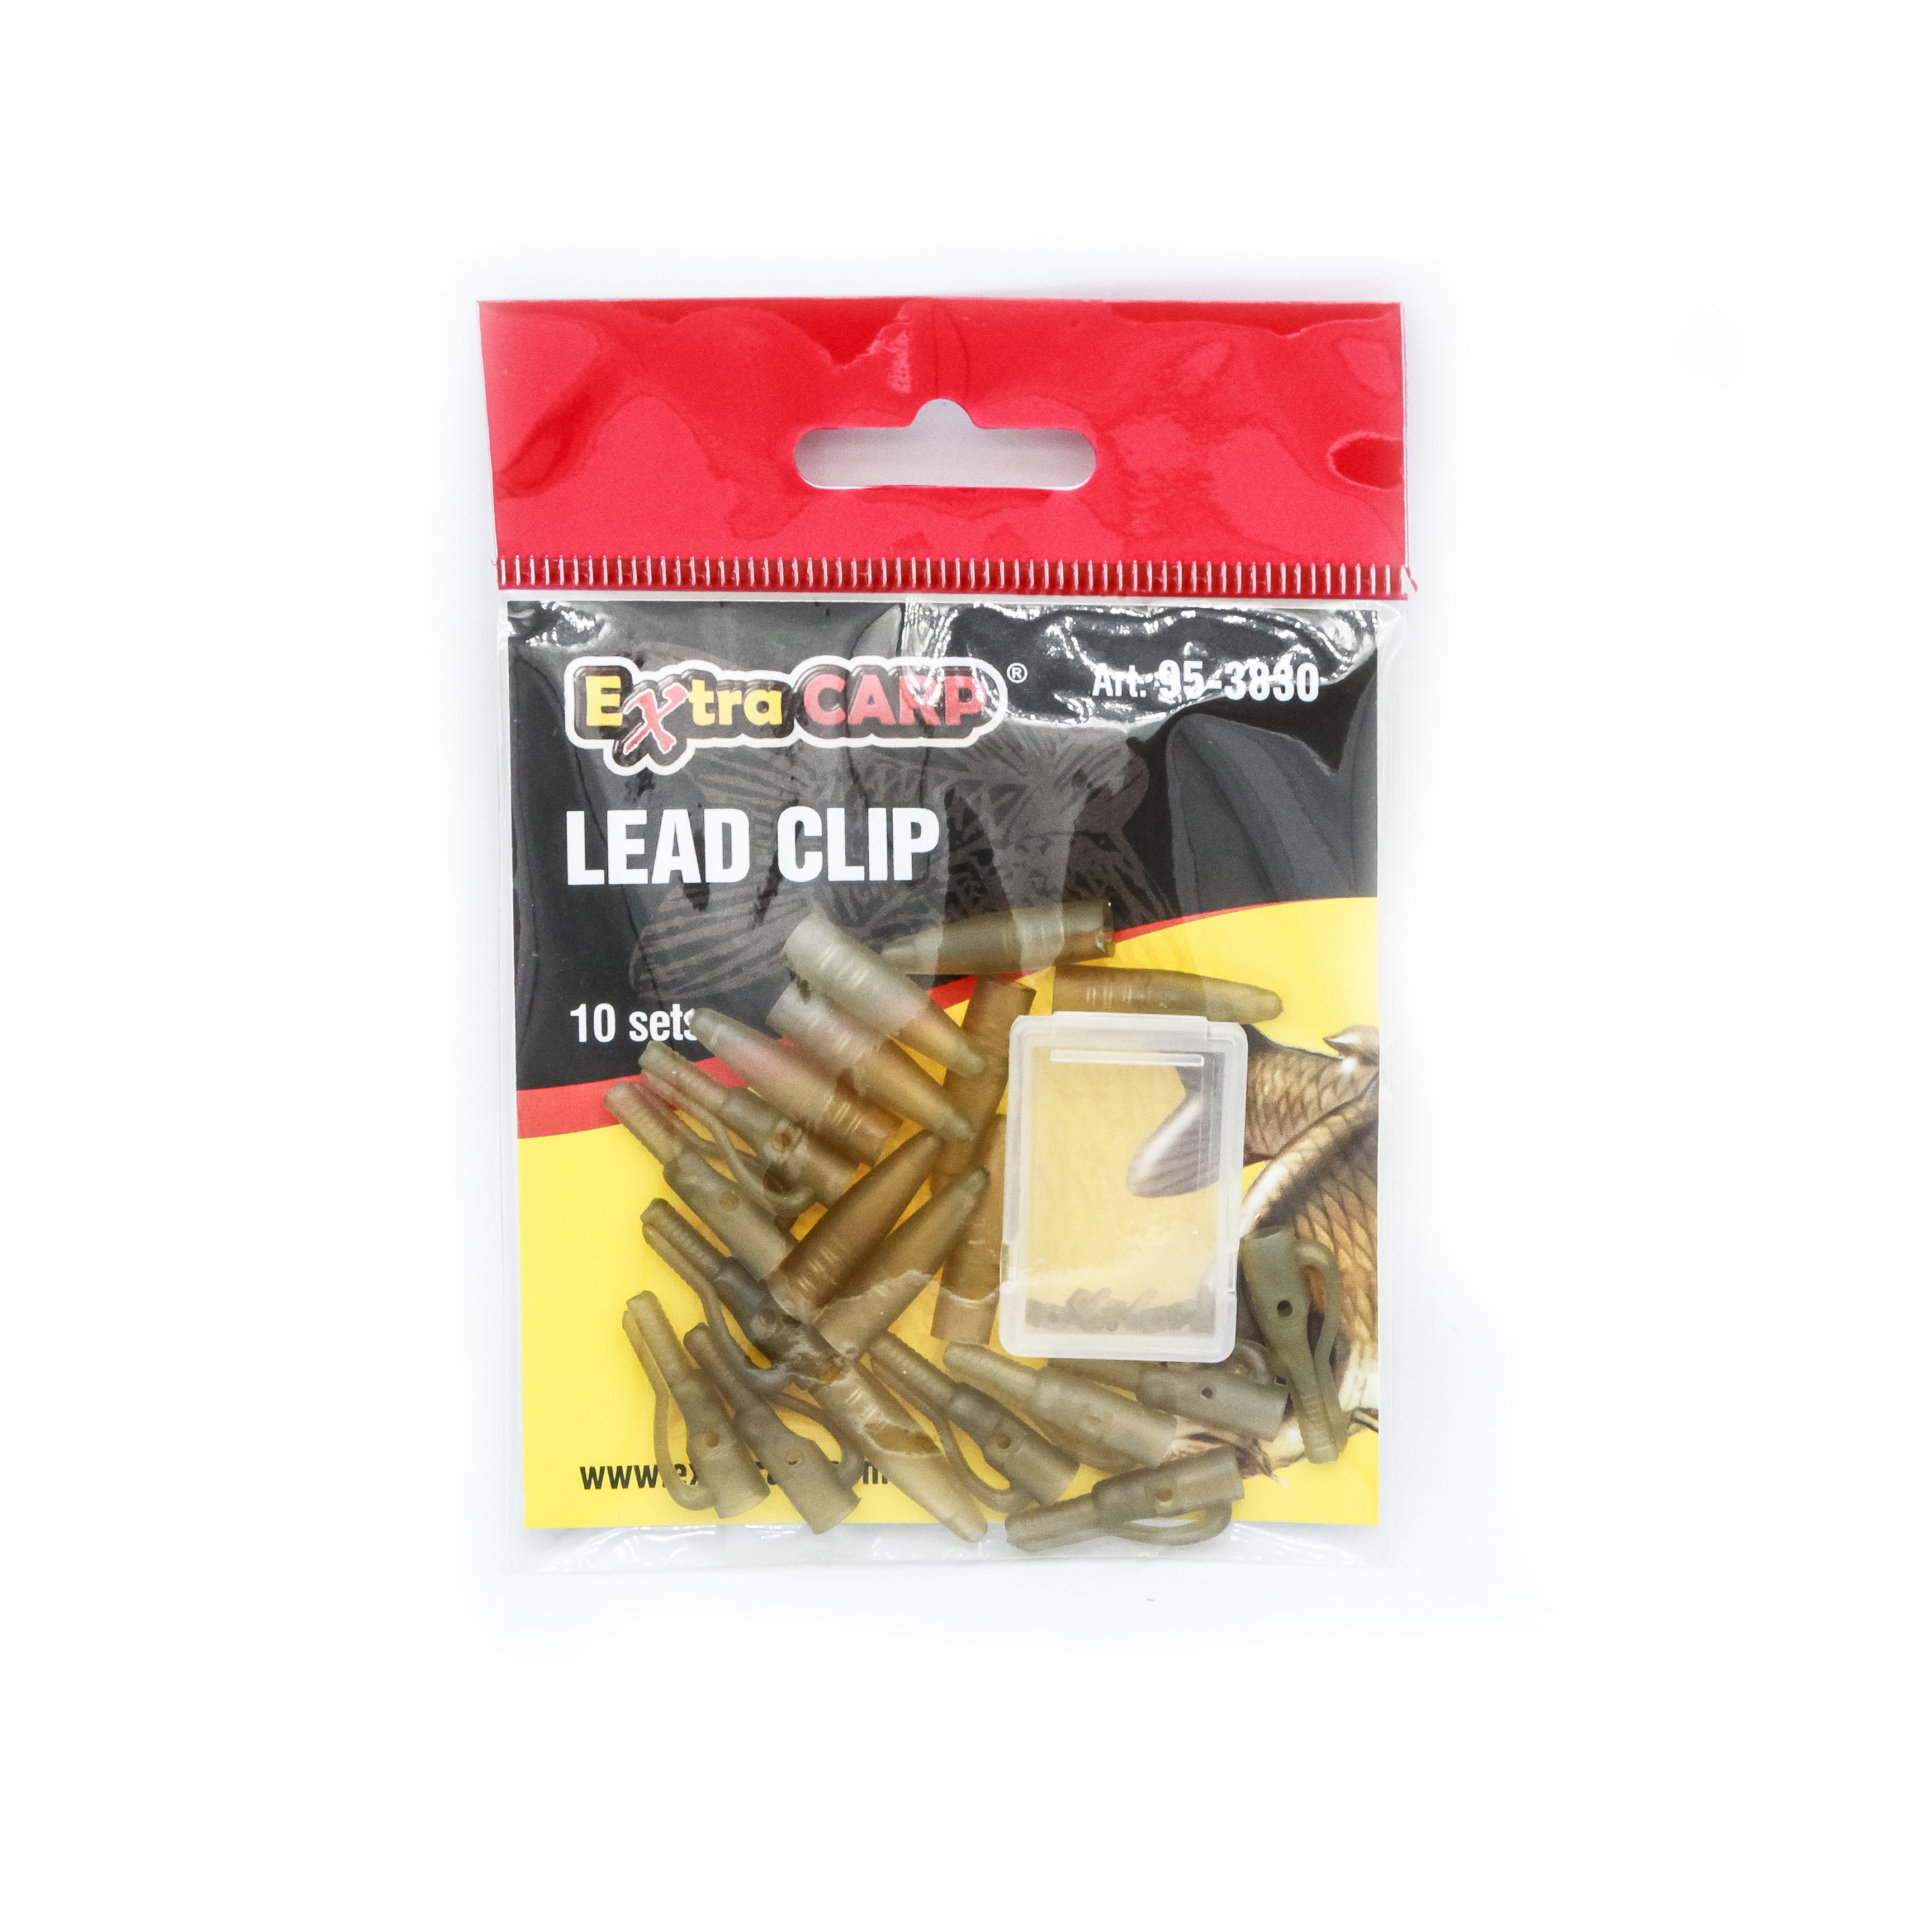 Extra CARP Lead Clip 95-3830